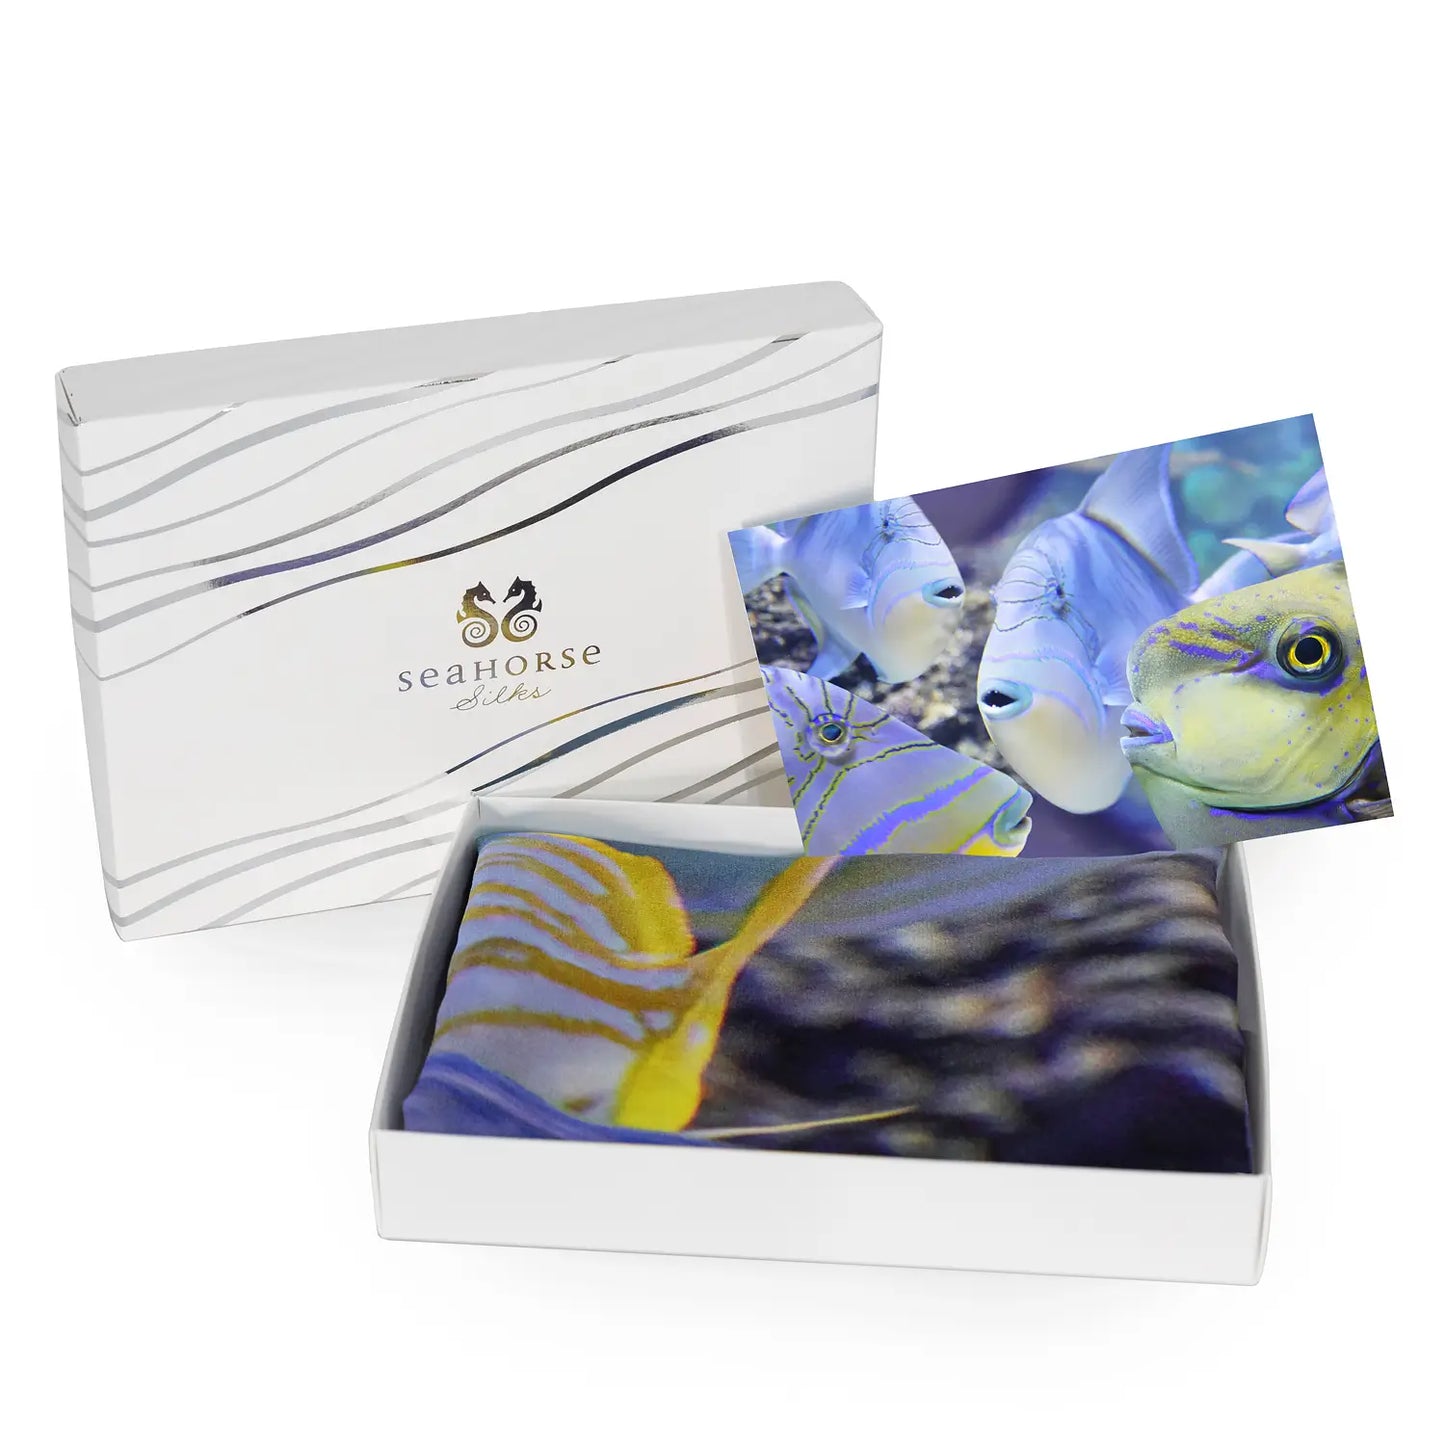 aquarium silk scarf by seahorse silks with gift box and greeting card